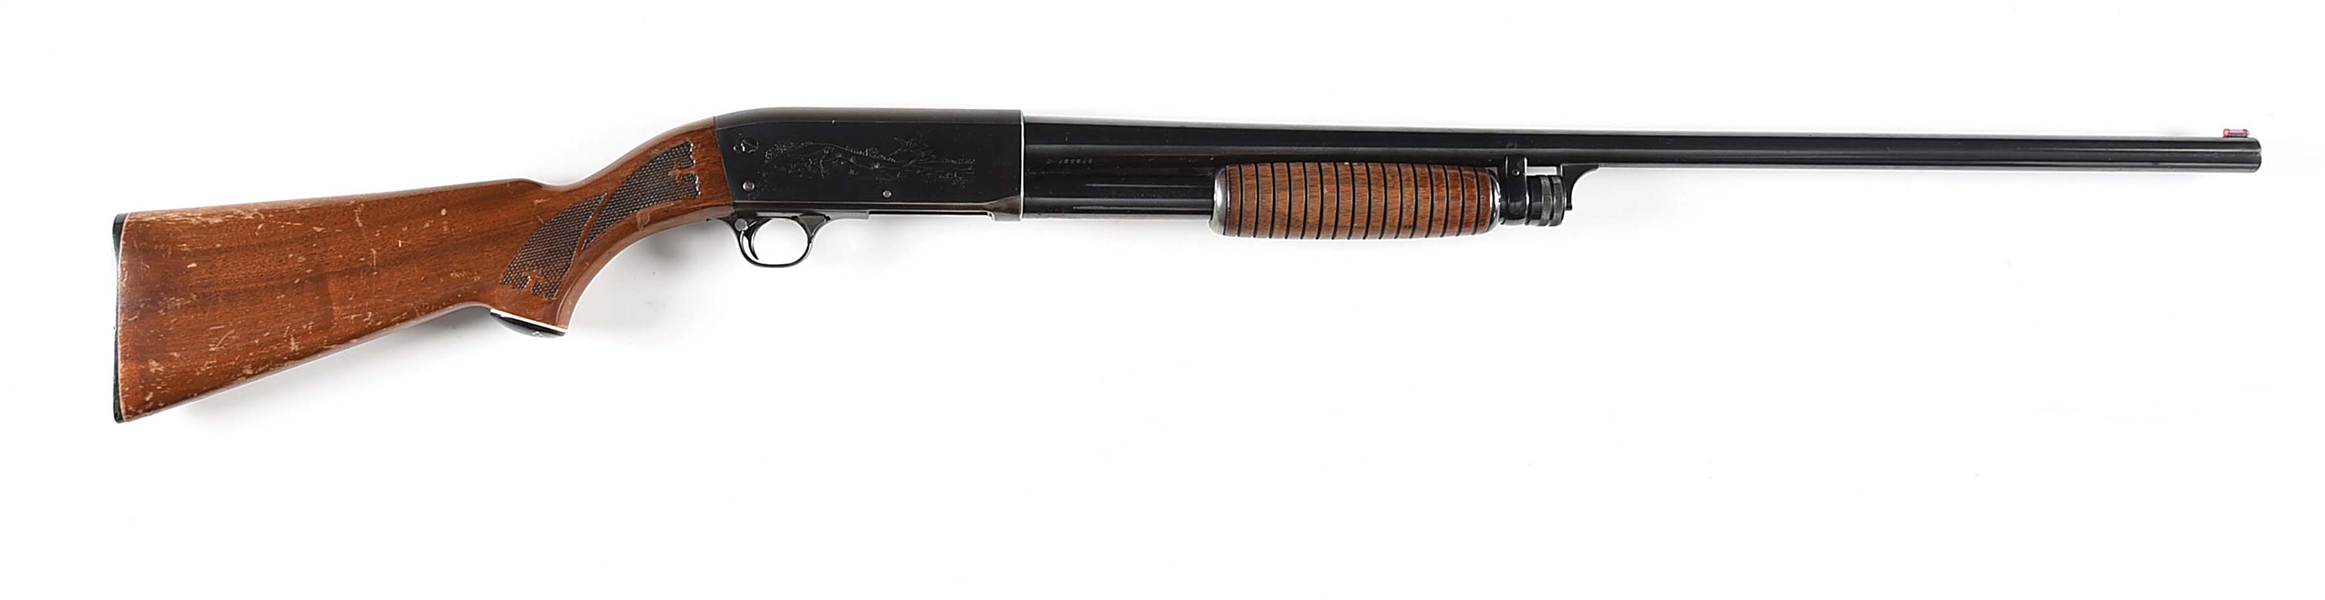 ithaca shotguns model 37 serial numbers